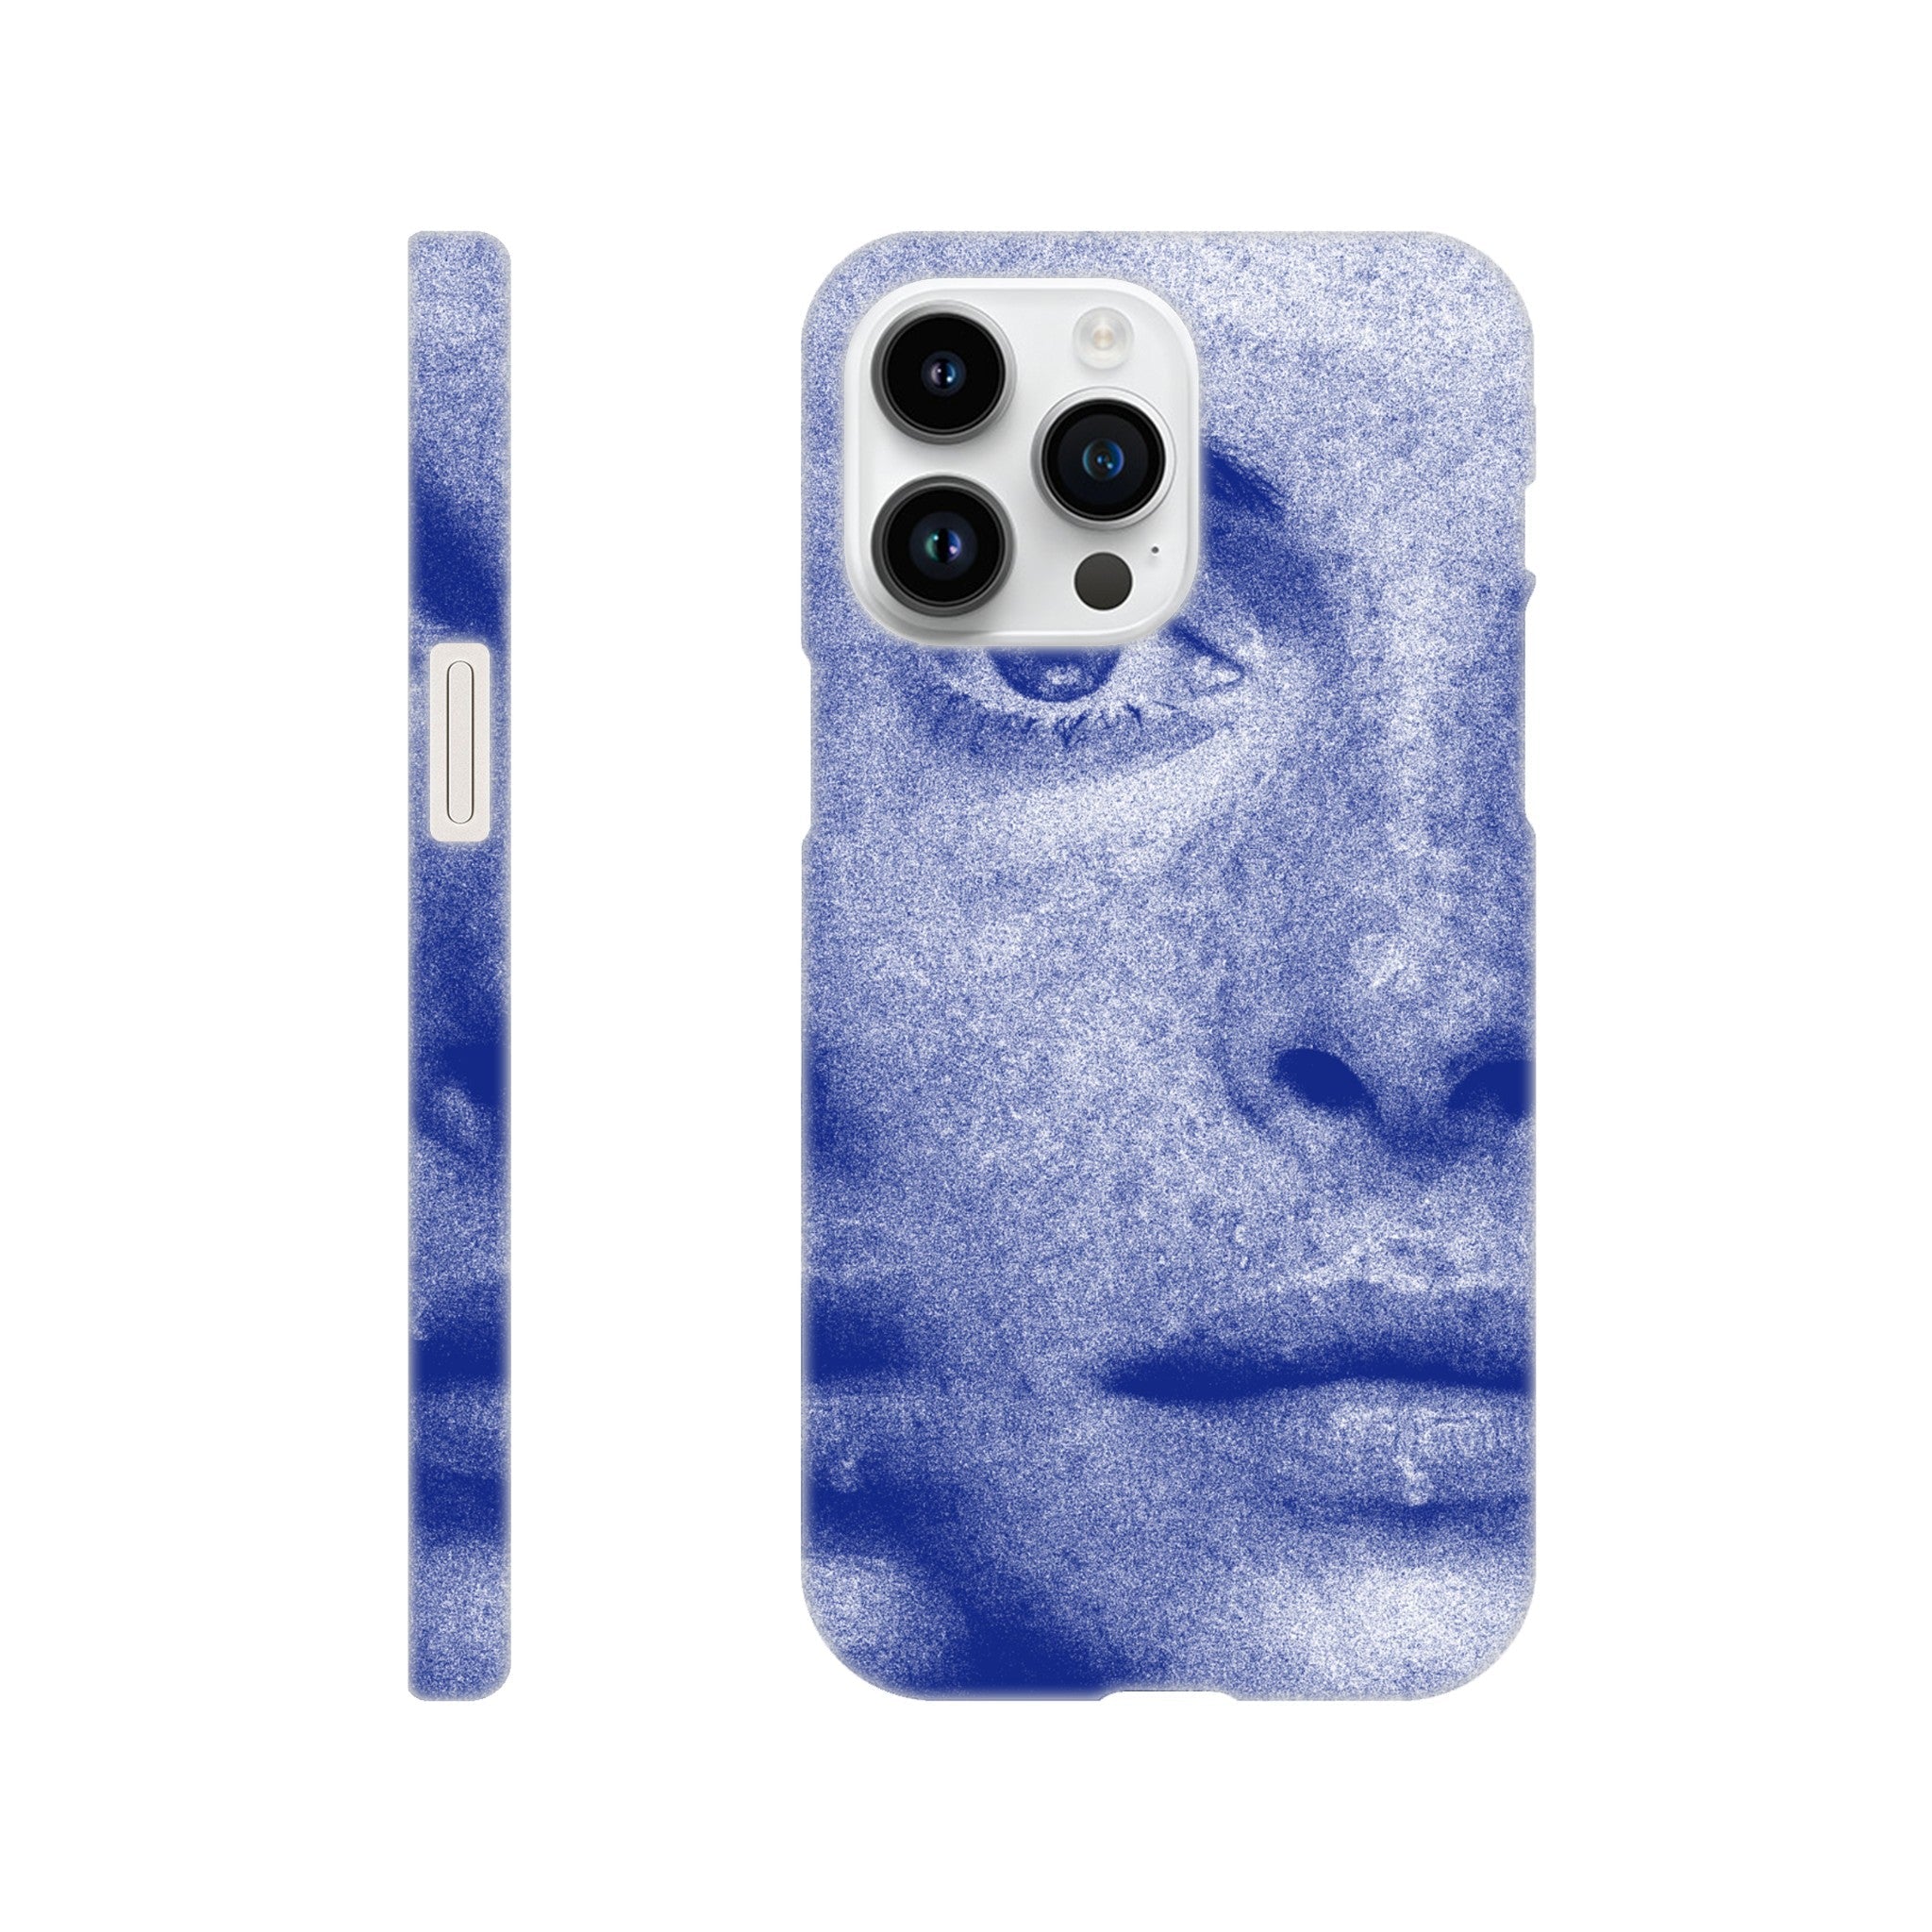 'Freckles' phone case - In Print We Trust